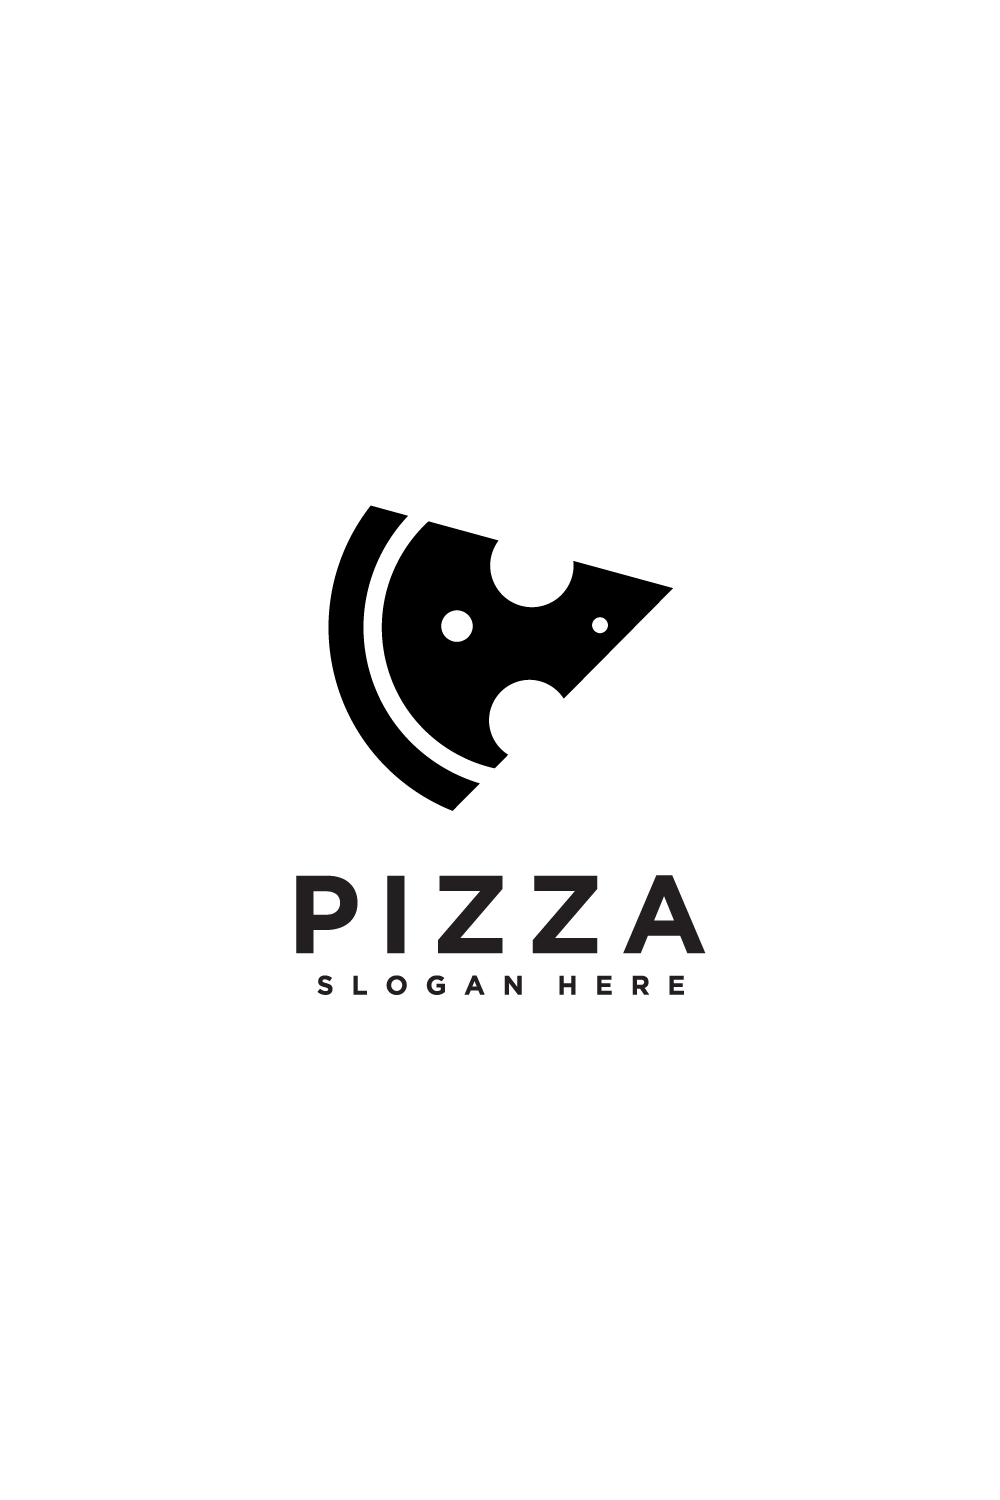 pizza logo vector design template pinterest preview image.